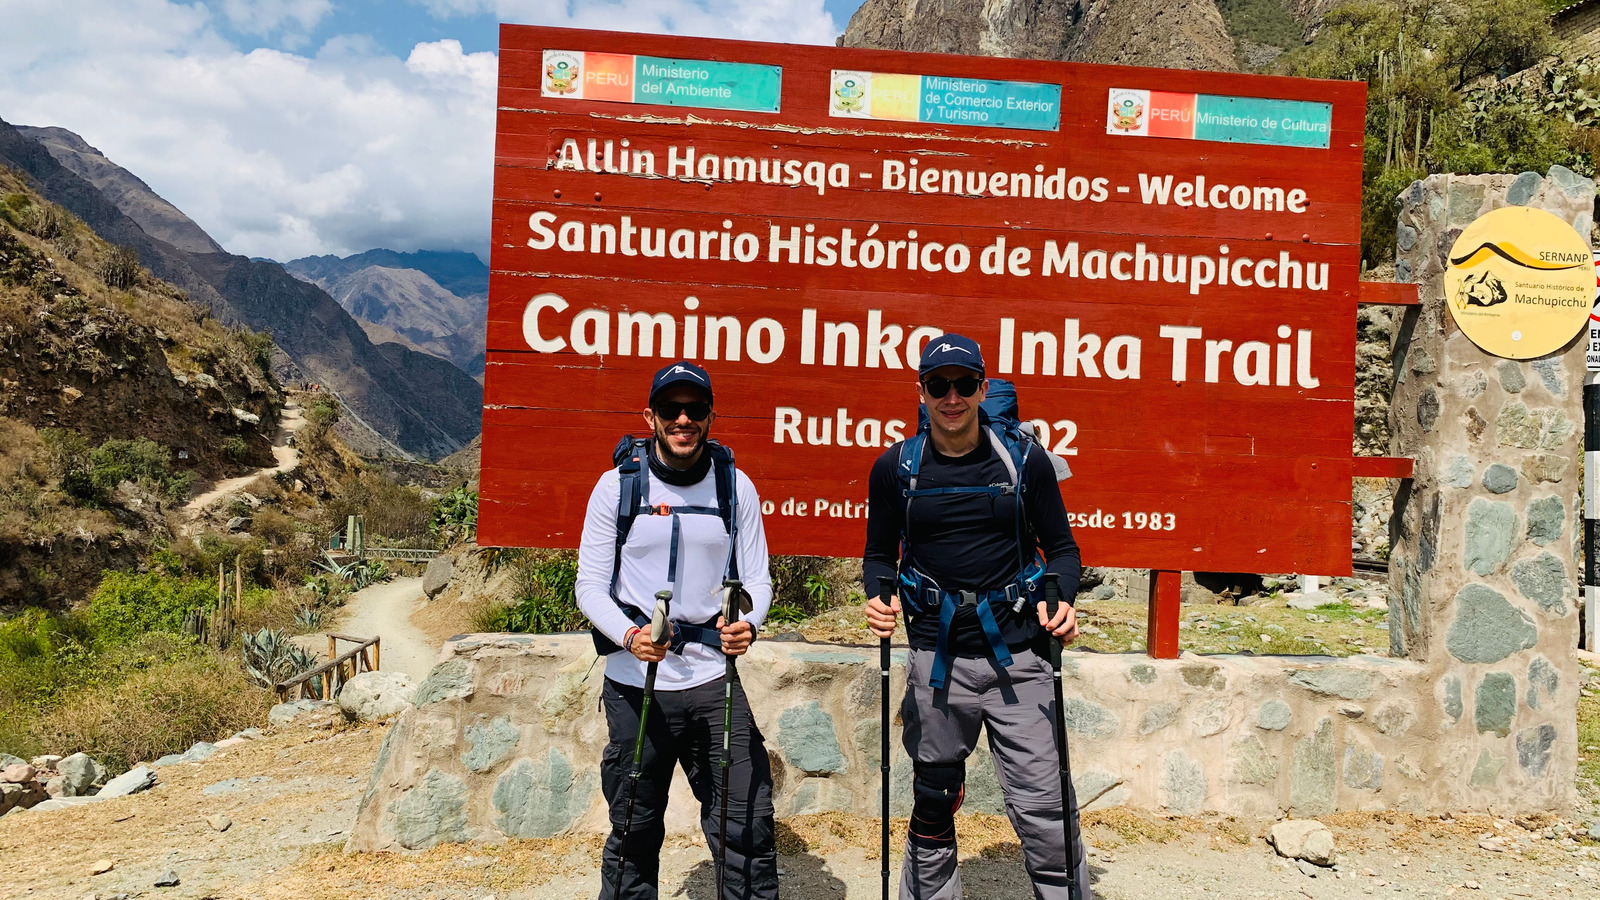 Inca Trail to Machu Picchu 4 daysPhoto #6 